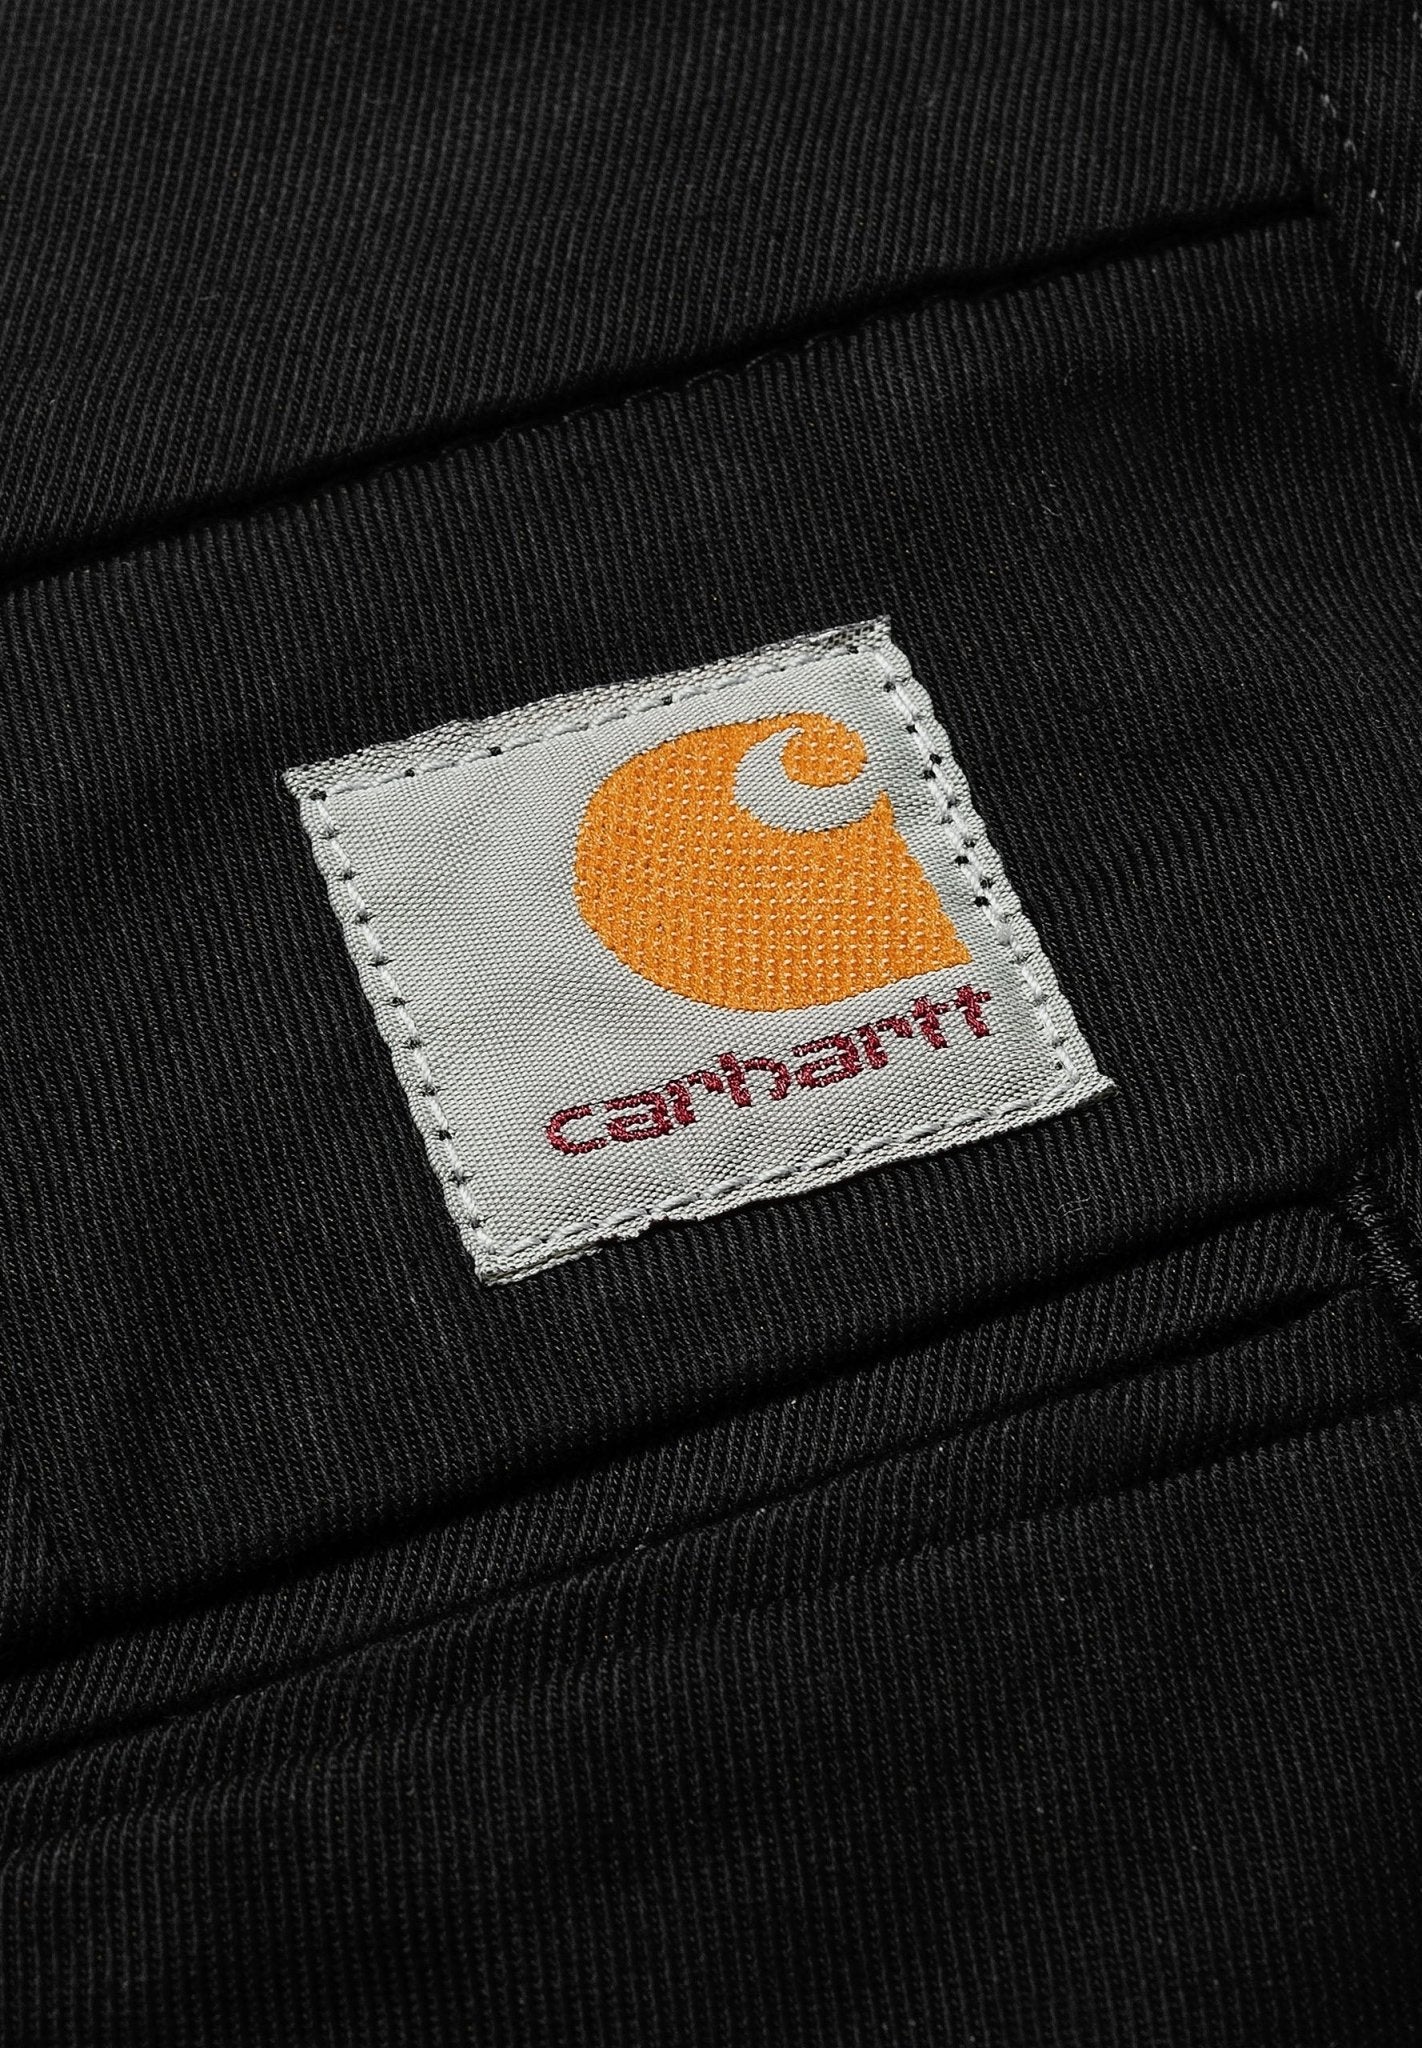 CARHARTT WIP-Sid Pant - BACKYARD